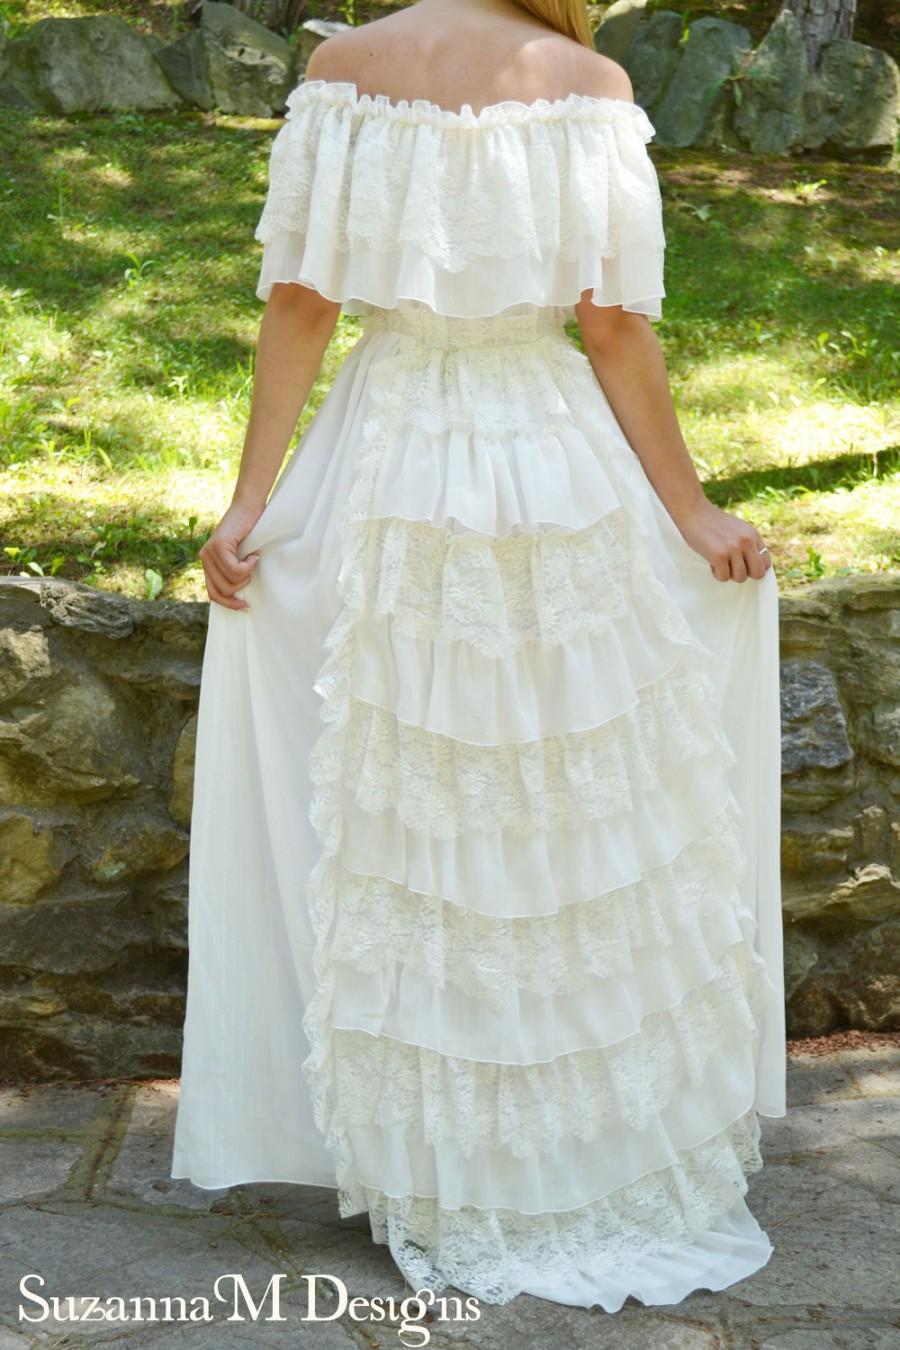 زفاف - Wedding Clothing Bridal Gowns & Separates  Lace Ivory Wedding Dress Vintage Bohemian Gown Long Boho Wedding Gown Handmade by SuzannaMDesigns